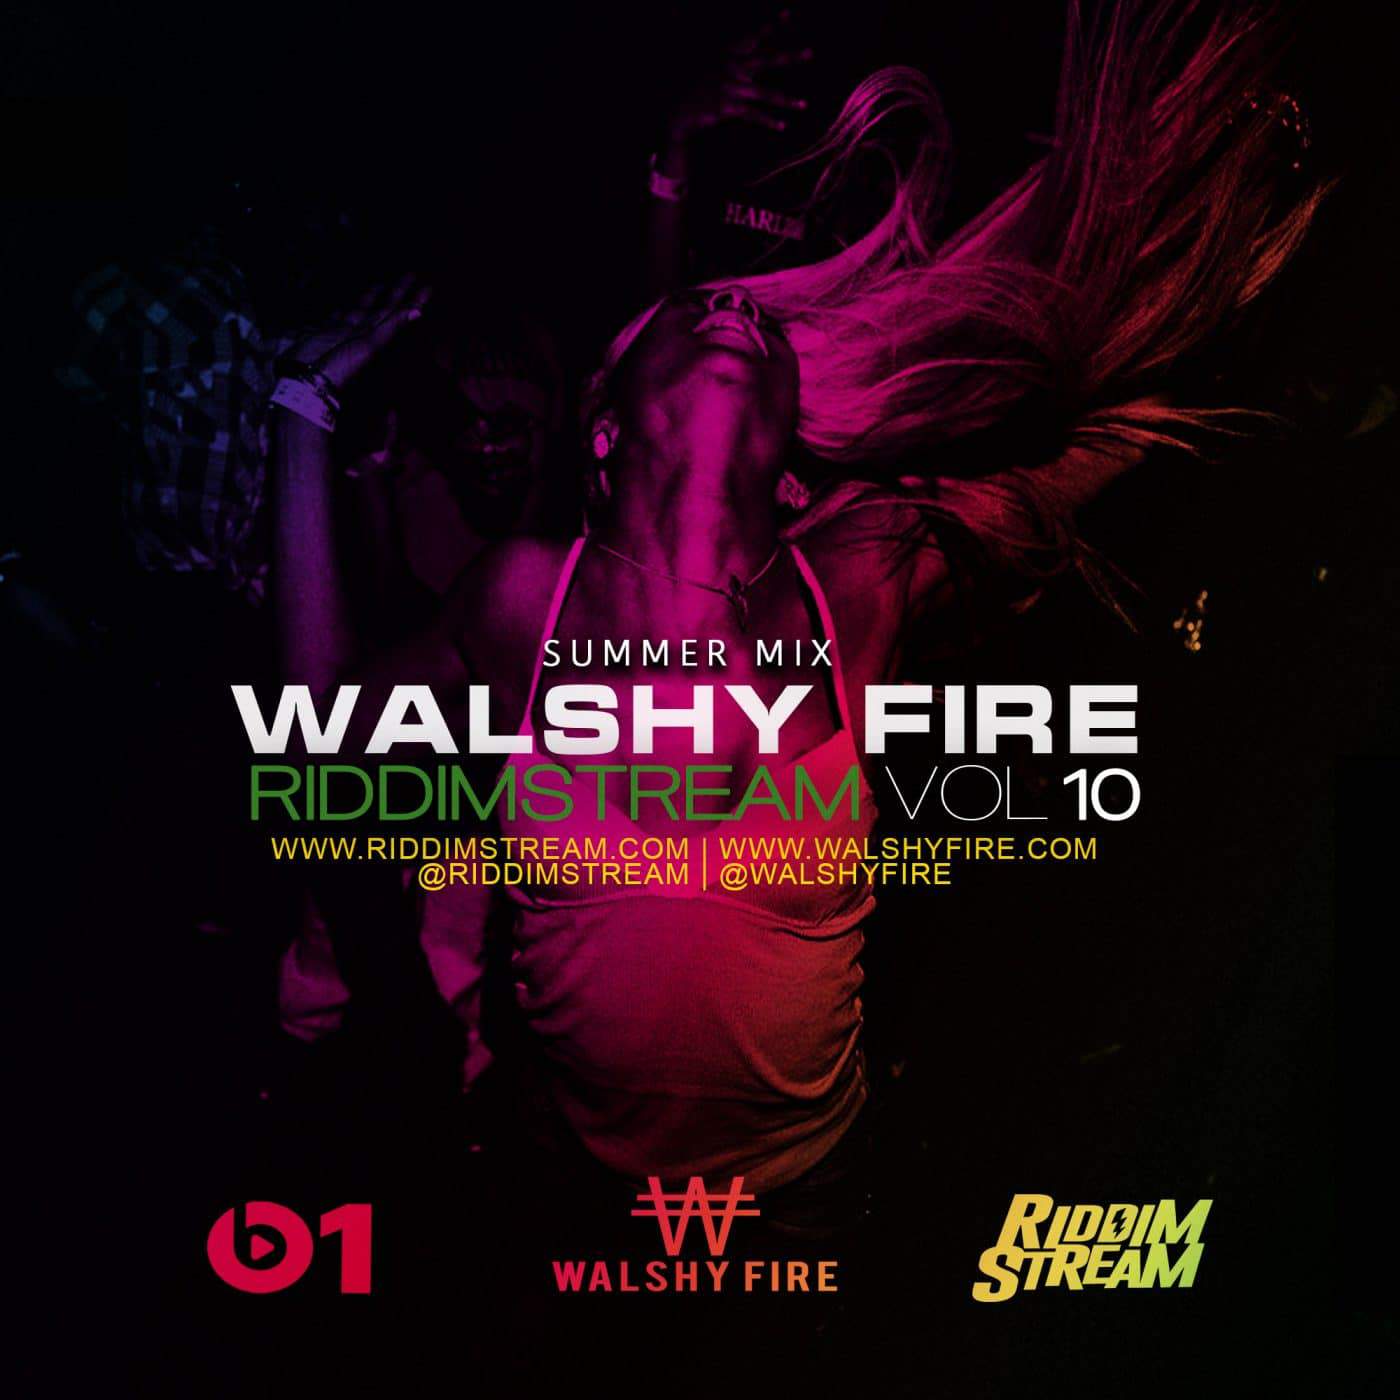 Walshy Fire - RiddimStream Vol 10 - 2017 Summer Mix